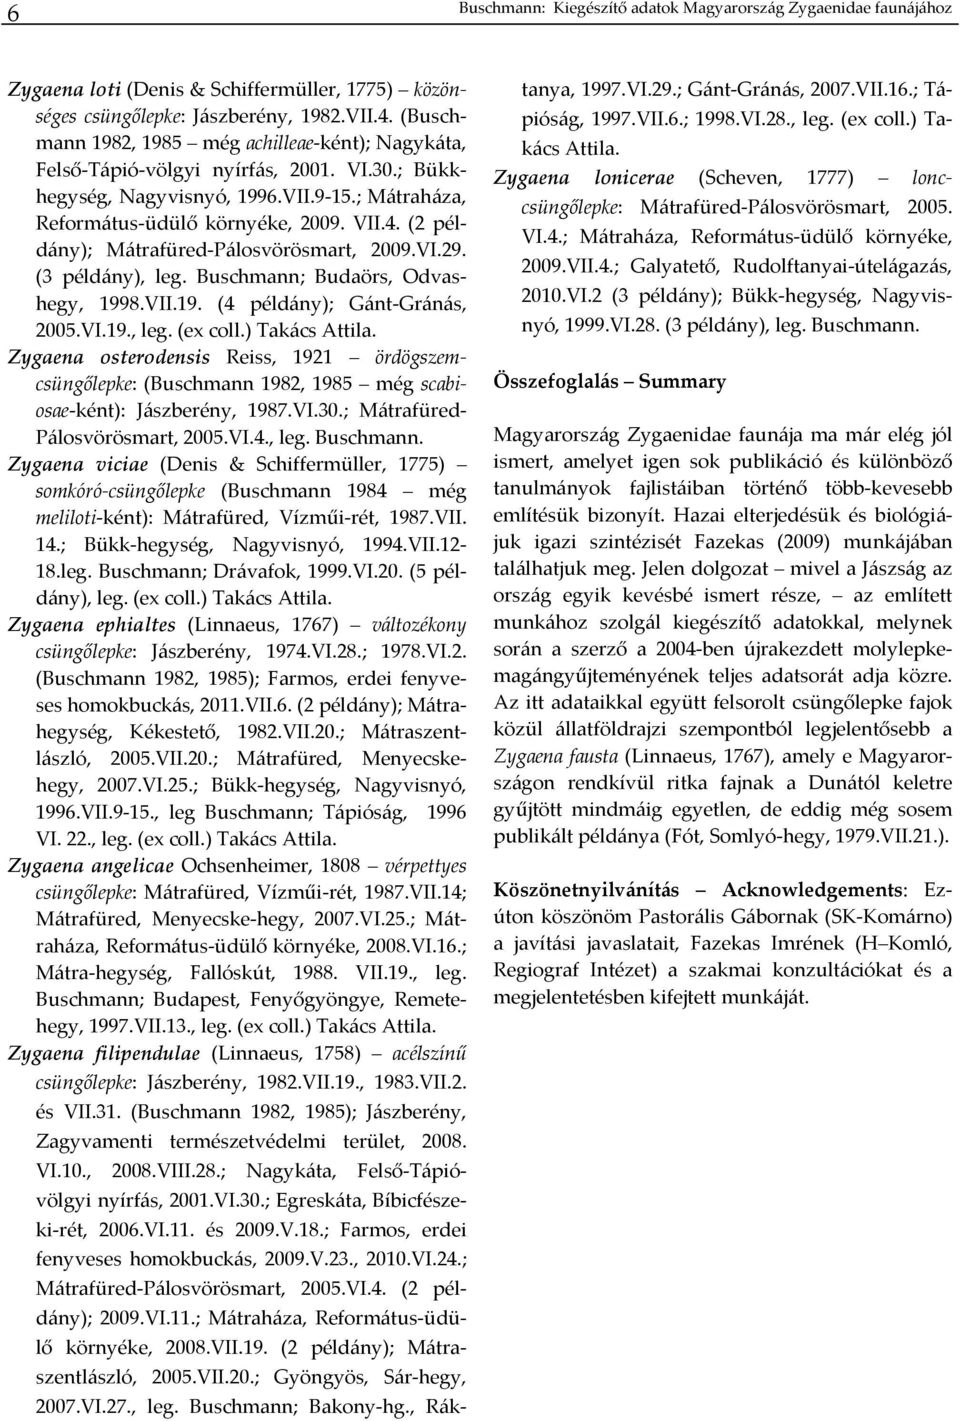 (2 példány); Mátrafüred Pálosvörösmart, 2009.VI.29. (3 példány), leg. Buschmann; Budaörs, Odvashegy, 1998.VII.19. (4 példány); Gánt Gránás, 2005.VI.19., leg. (ex coll.) Takács Attila.